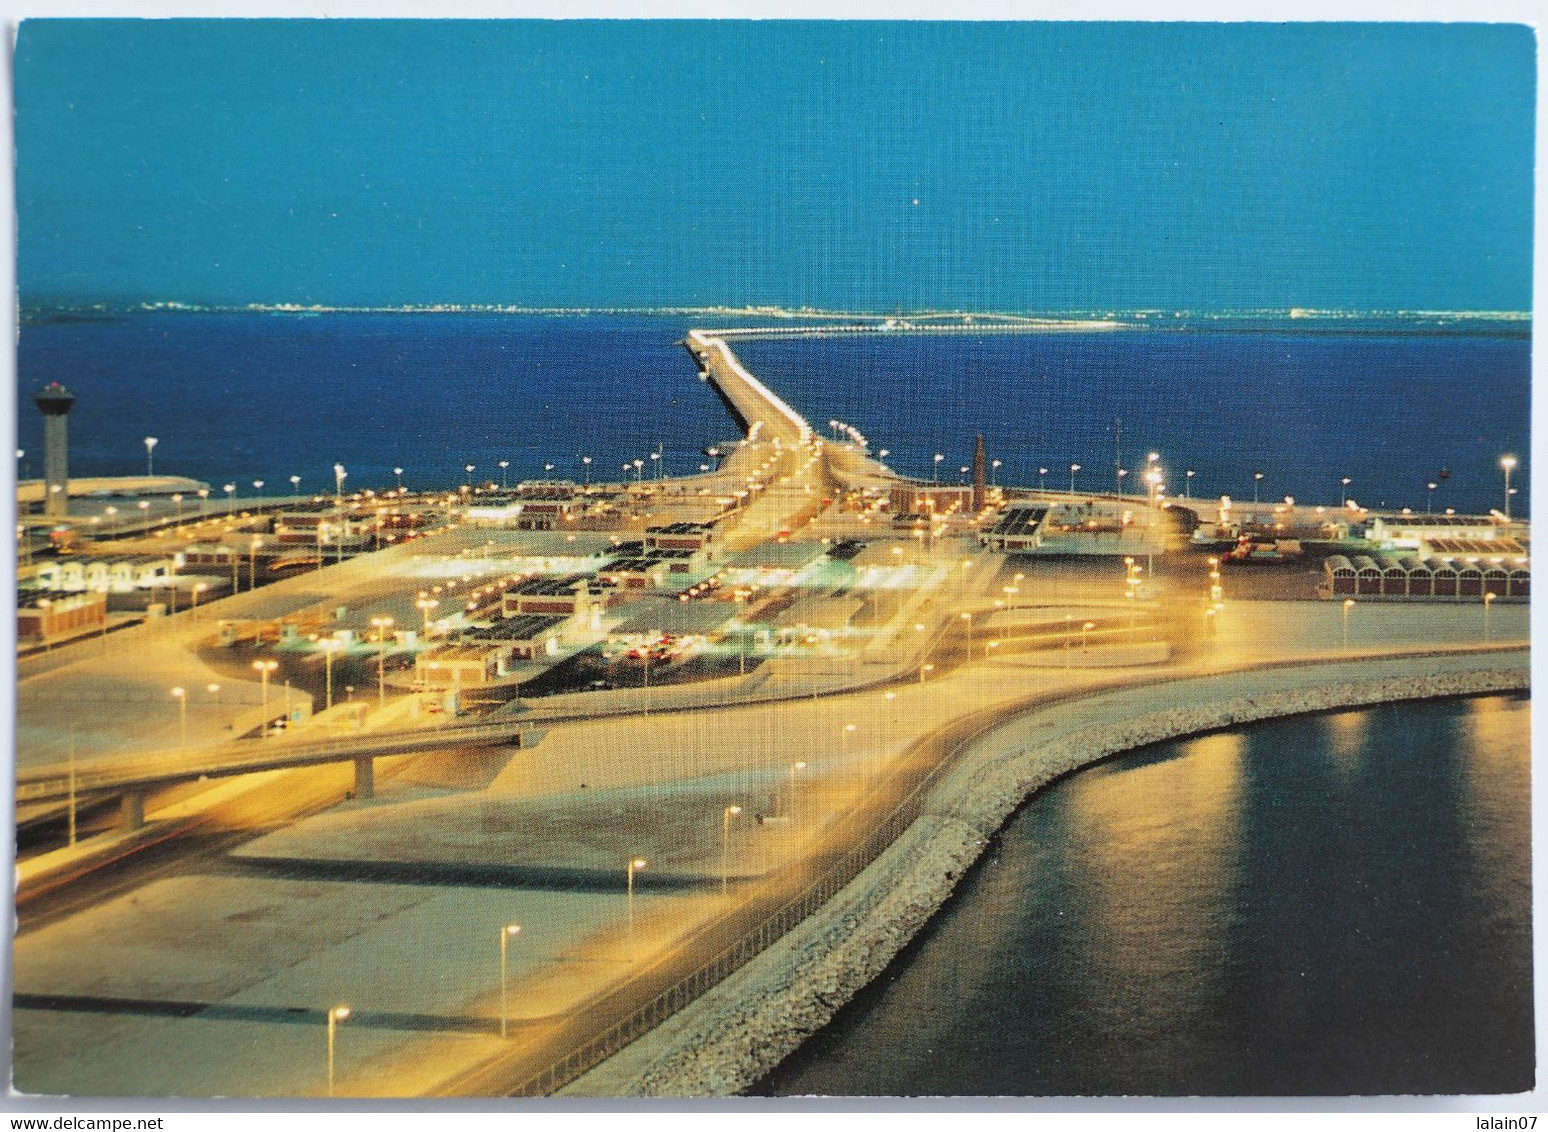 Carte Postale : BAHRAIN : King Fahd Causeway With Bahrain Coastline On The Horizon - Bahreïn